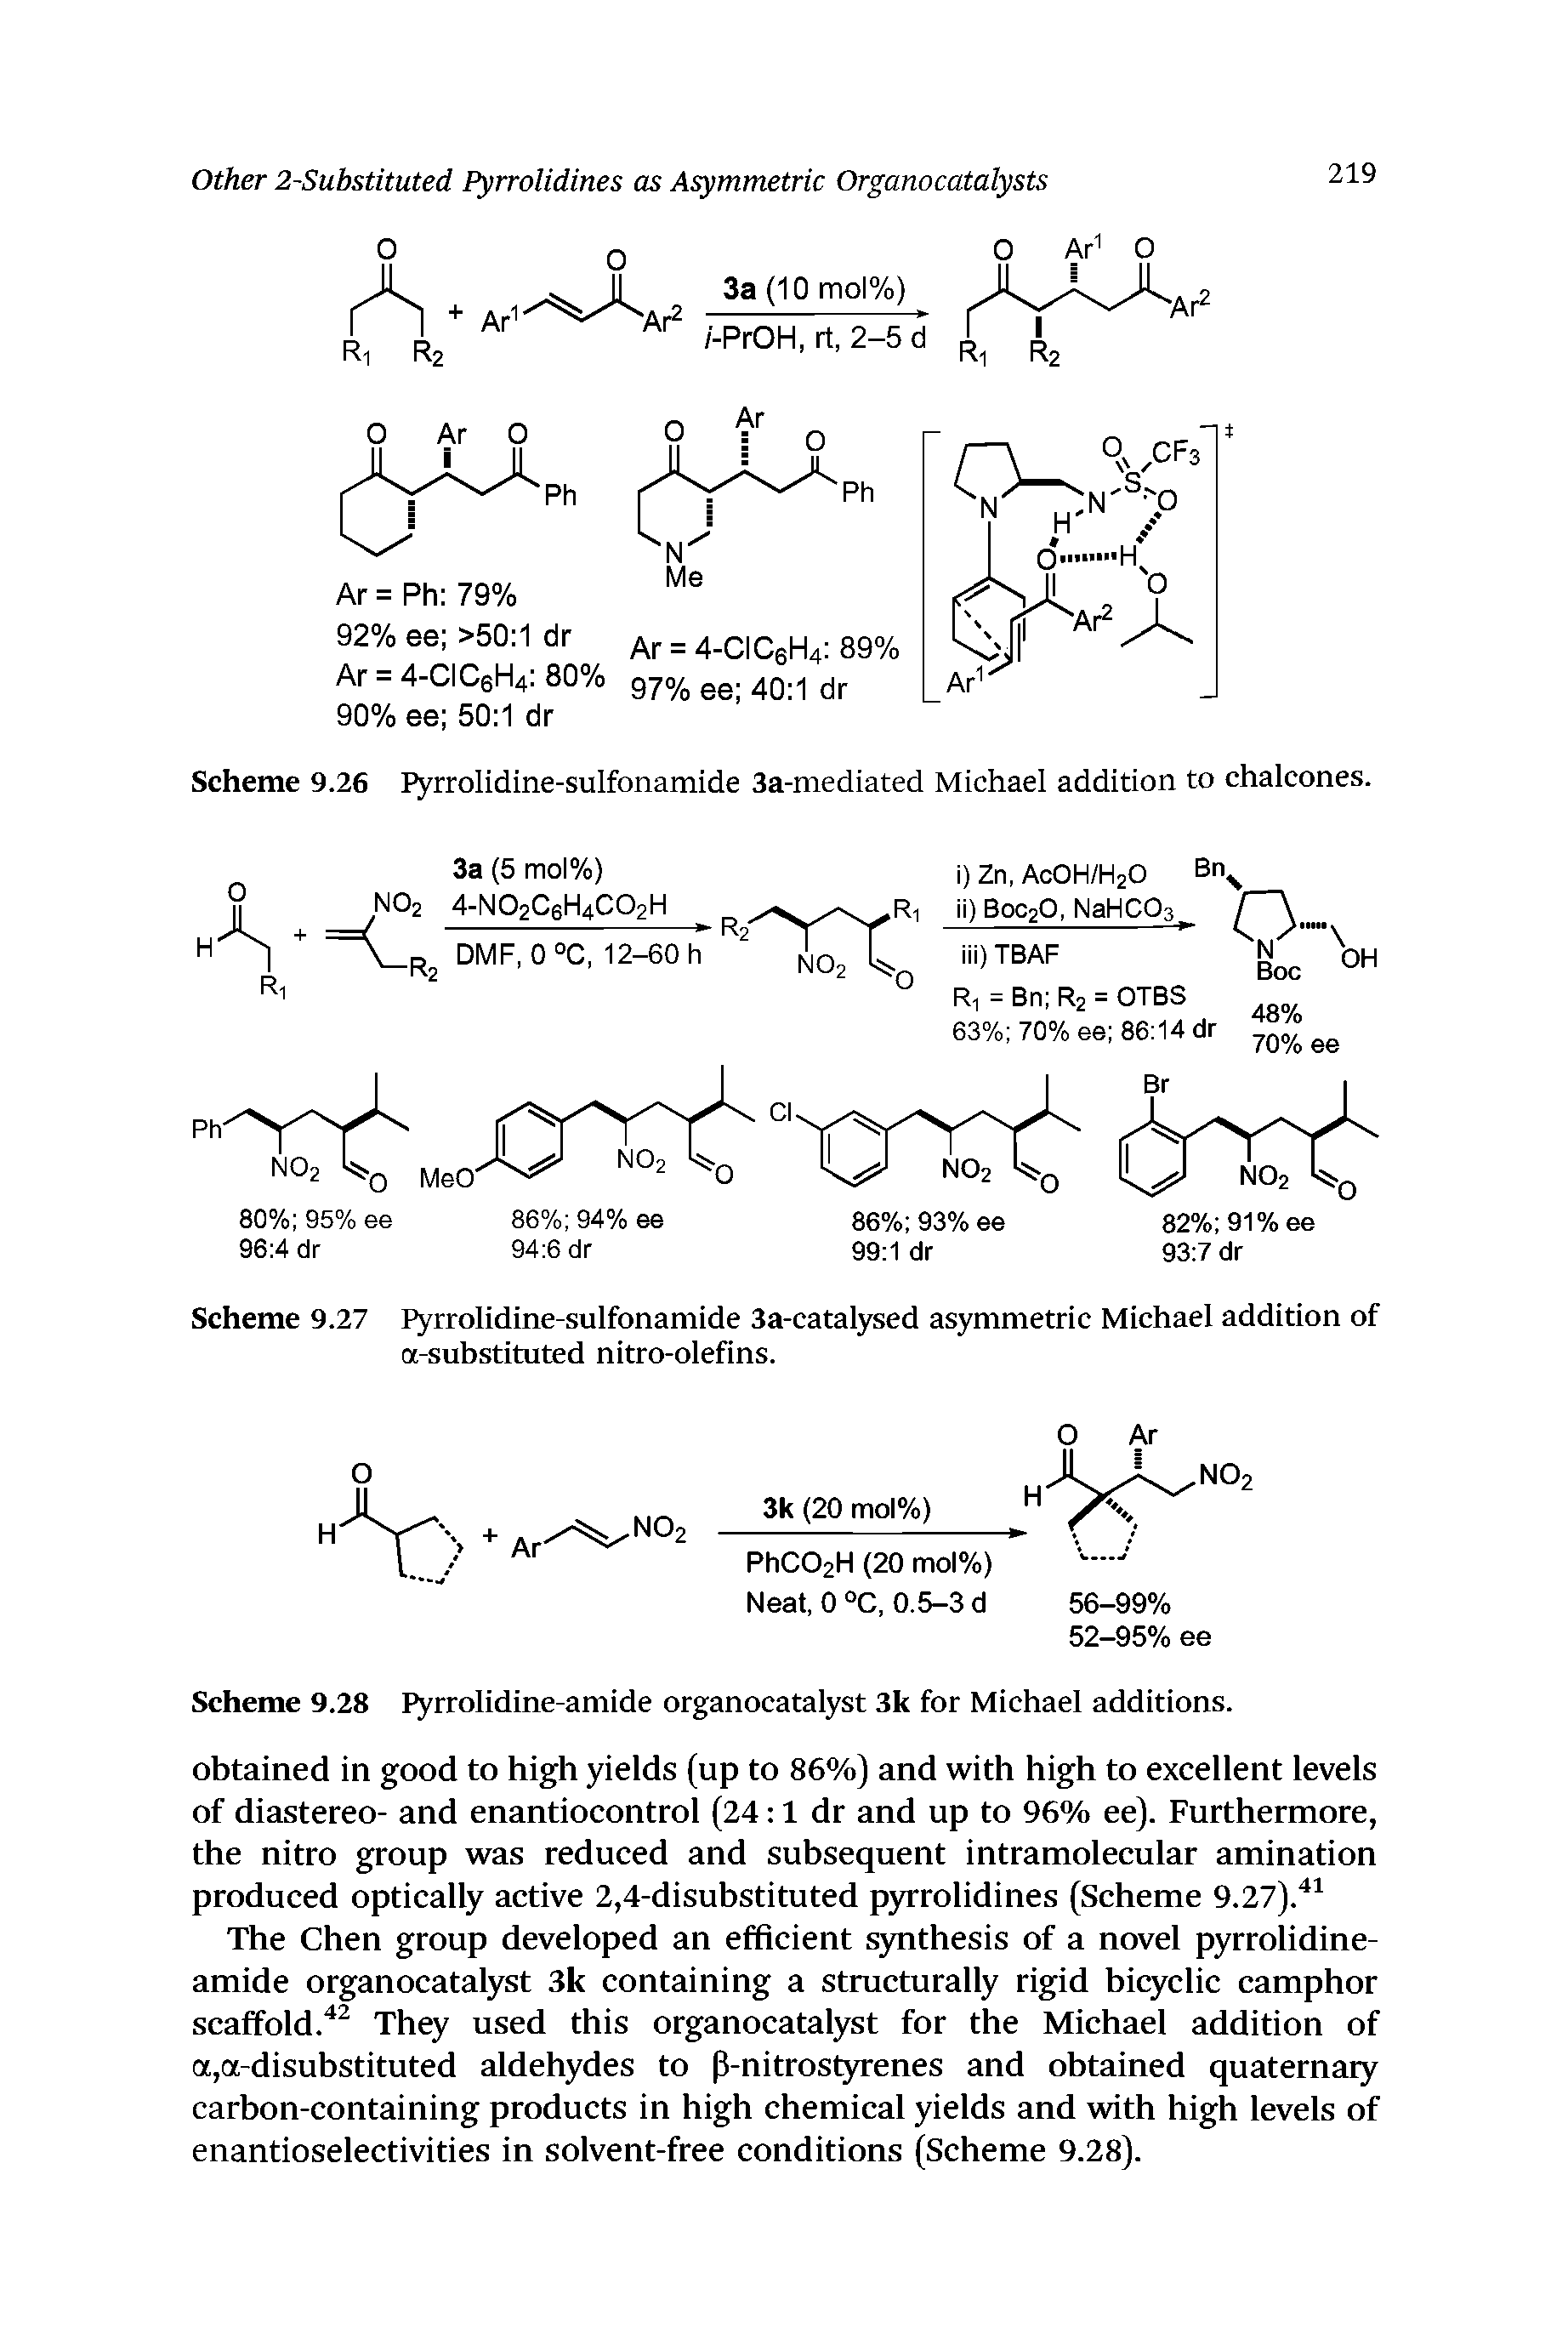 Scheme 9.26 Pyrrolidine-sulfonamide 3a-mediated Michael addition to chalcones.